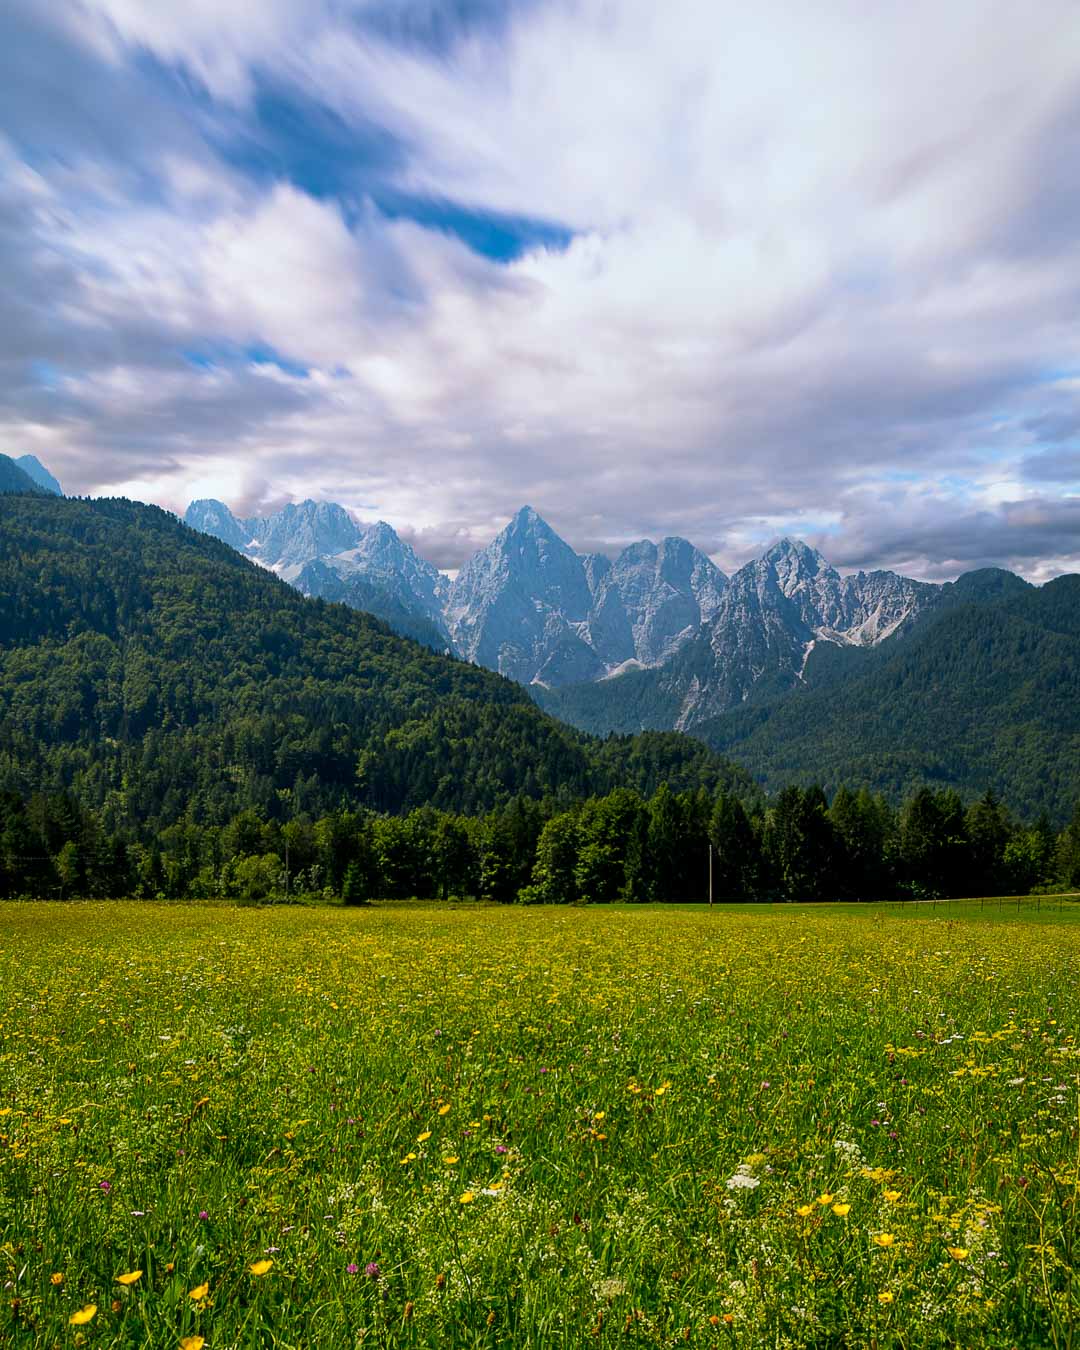 The impressive Slovenian mountain range from afar